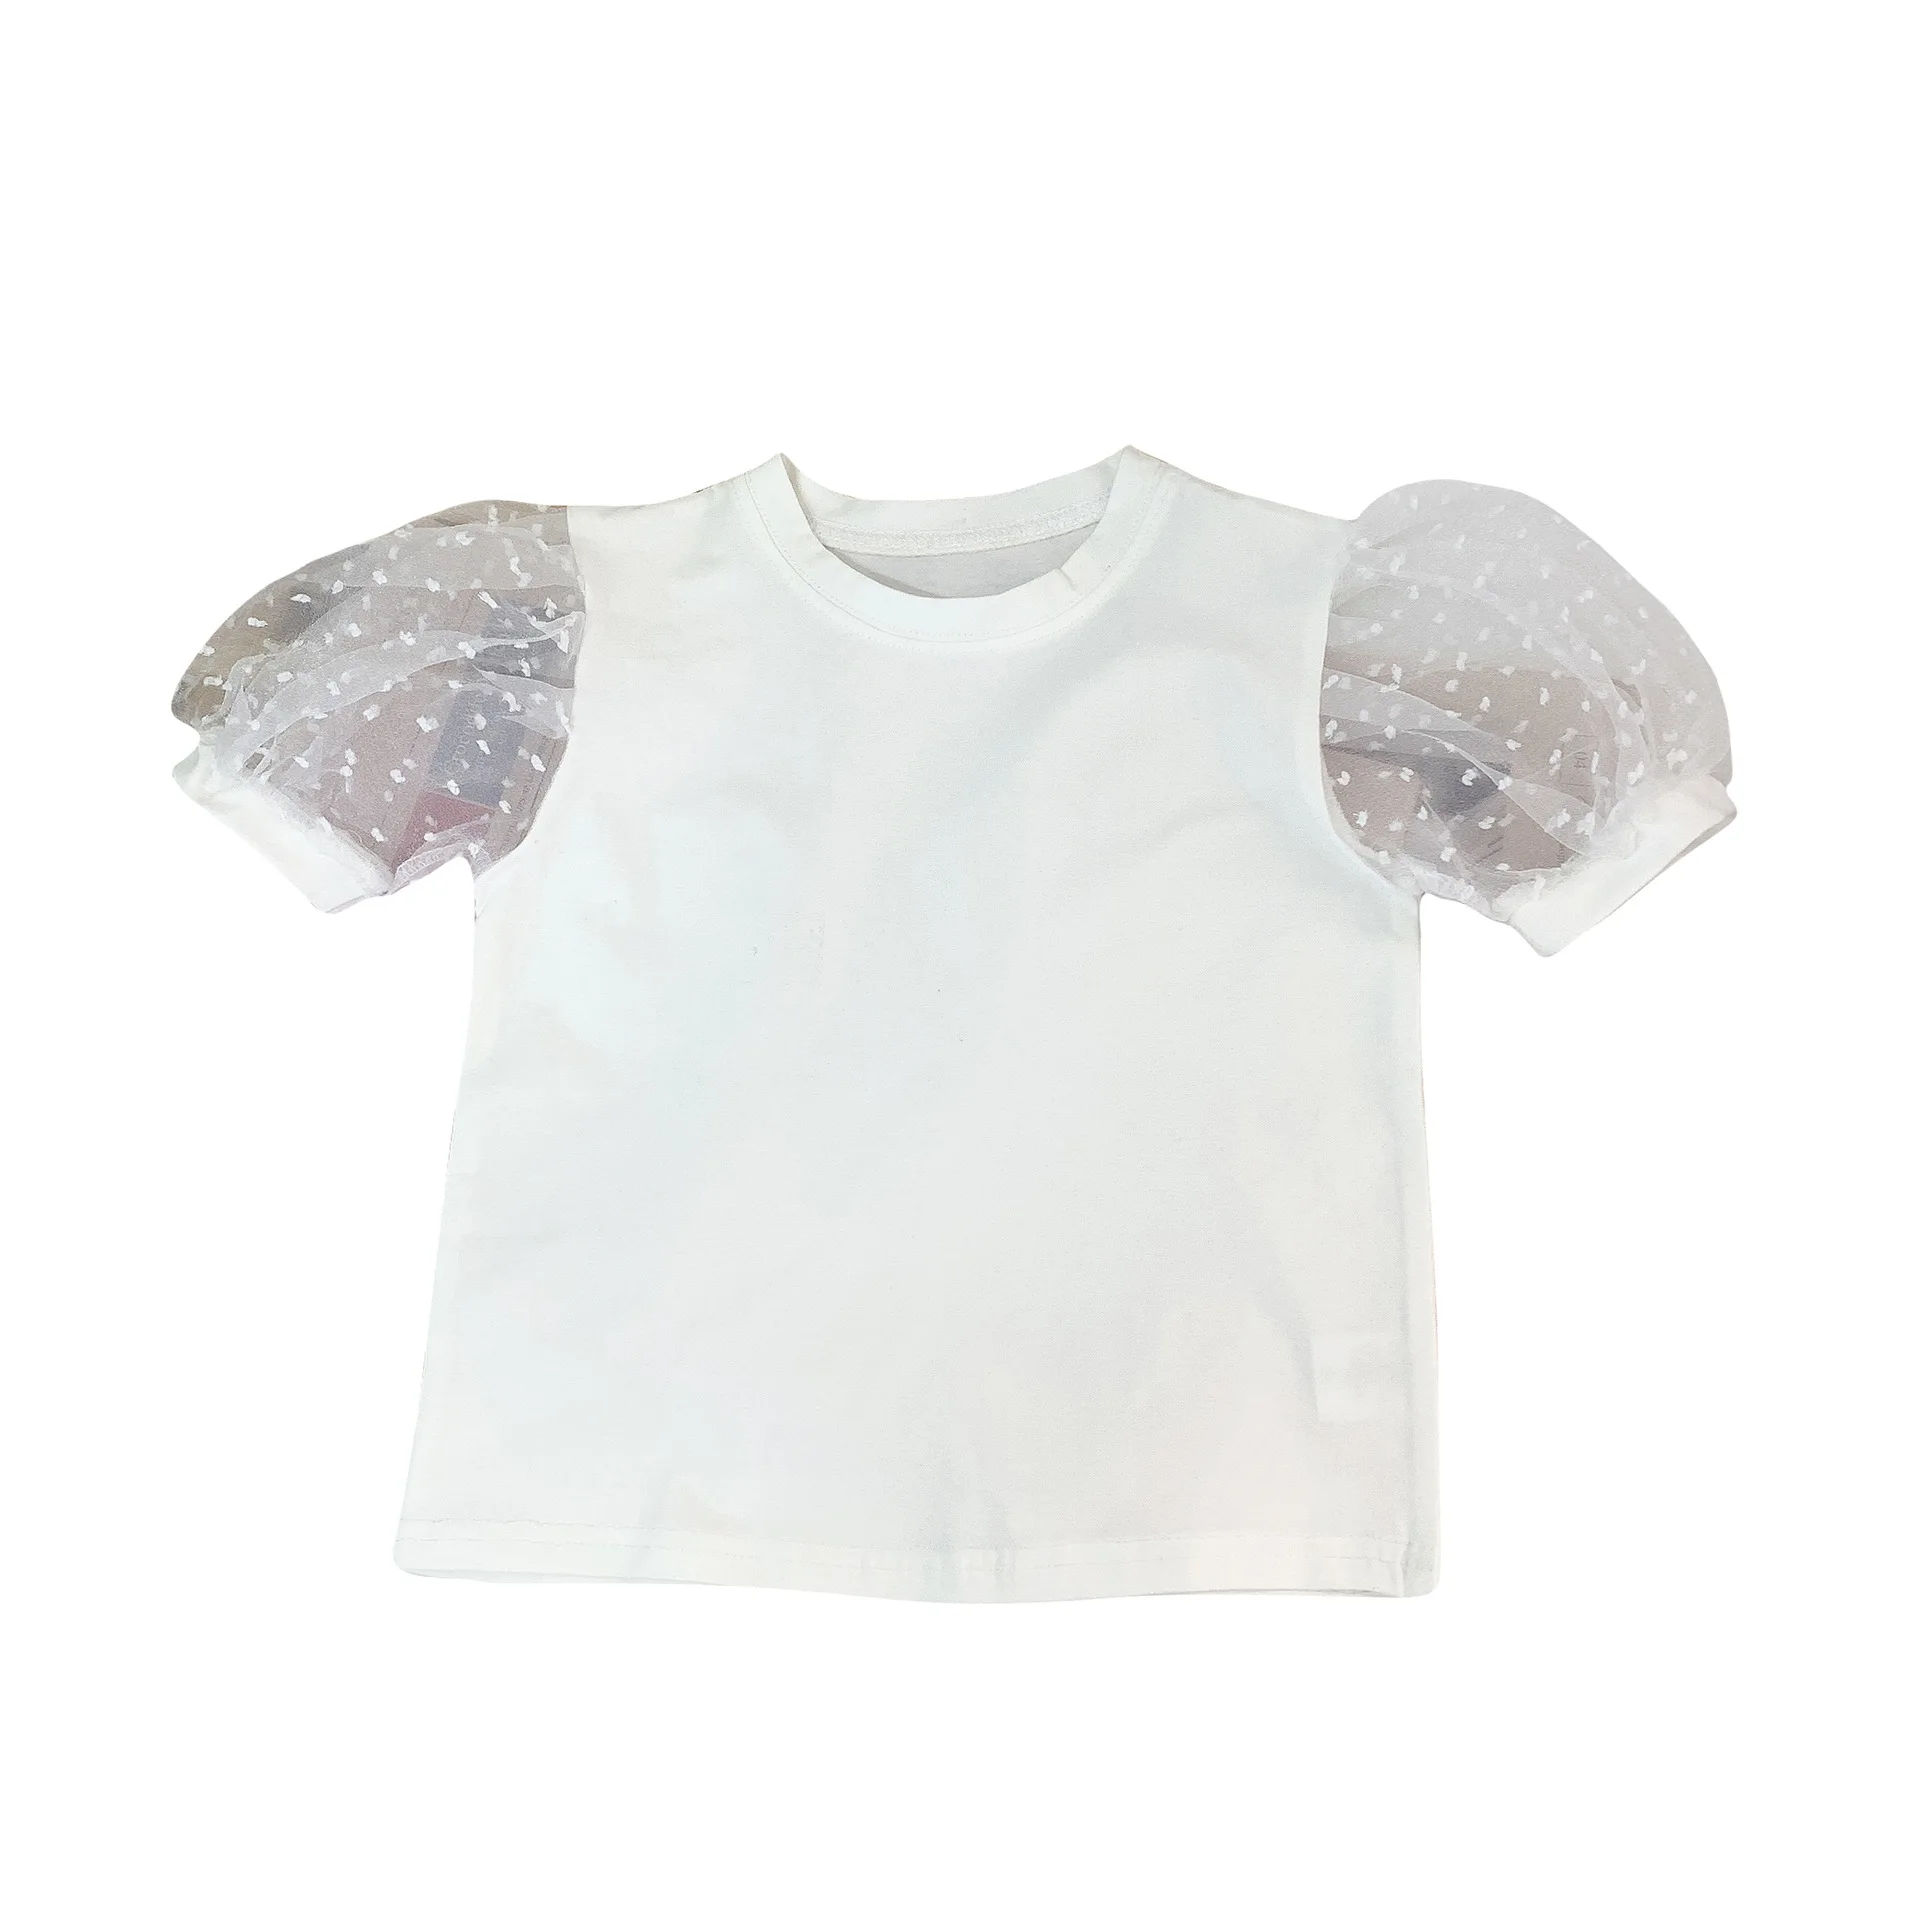 2022 Summer New Girls' Polka Dot T-shirt Children's Bell-sleeved Tops Bottoming Shirts Seersucker Short Sleeves enlarge